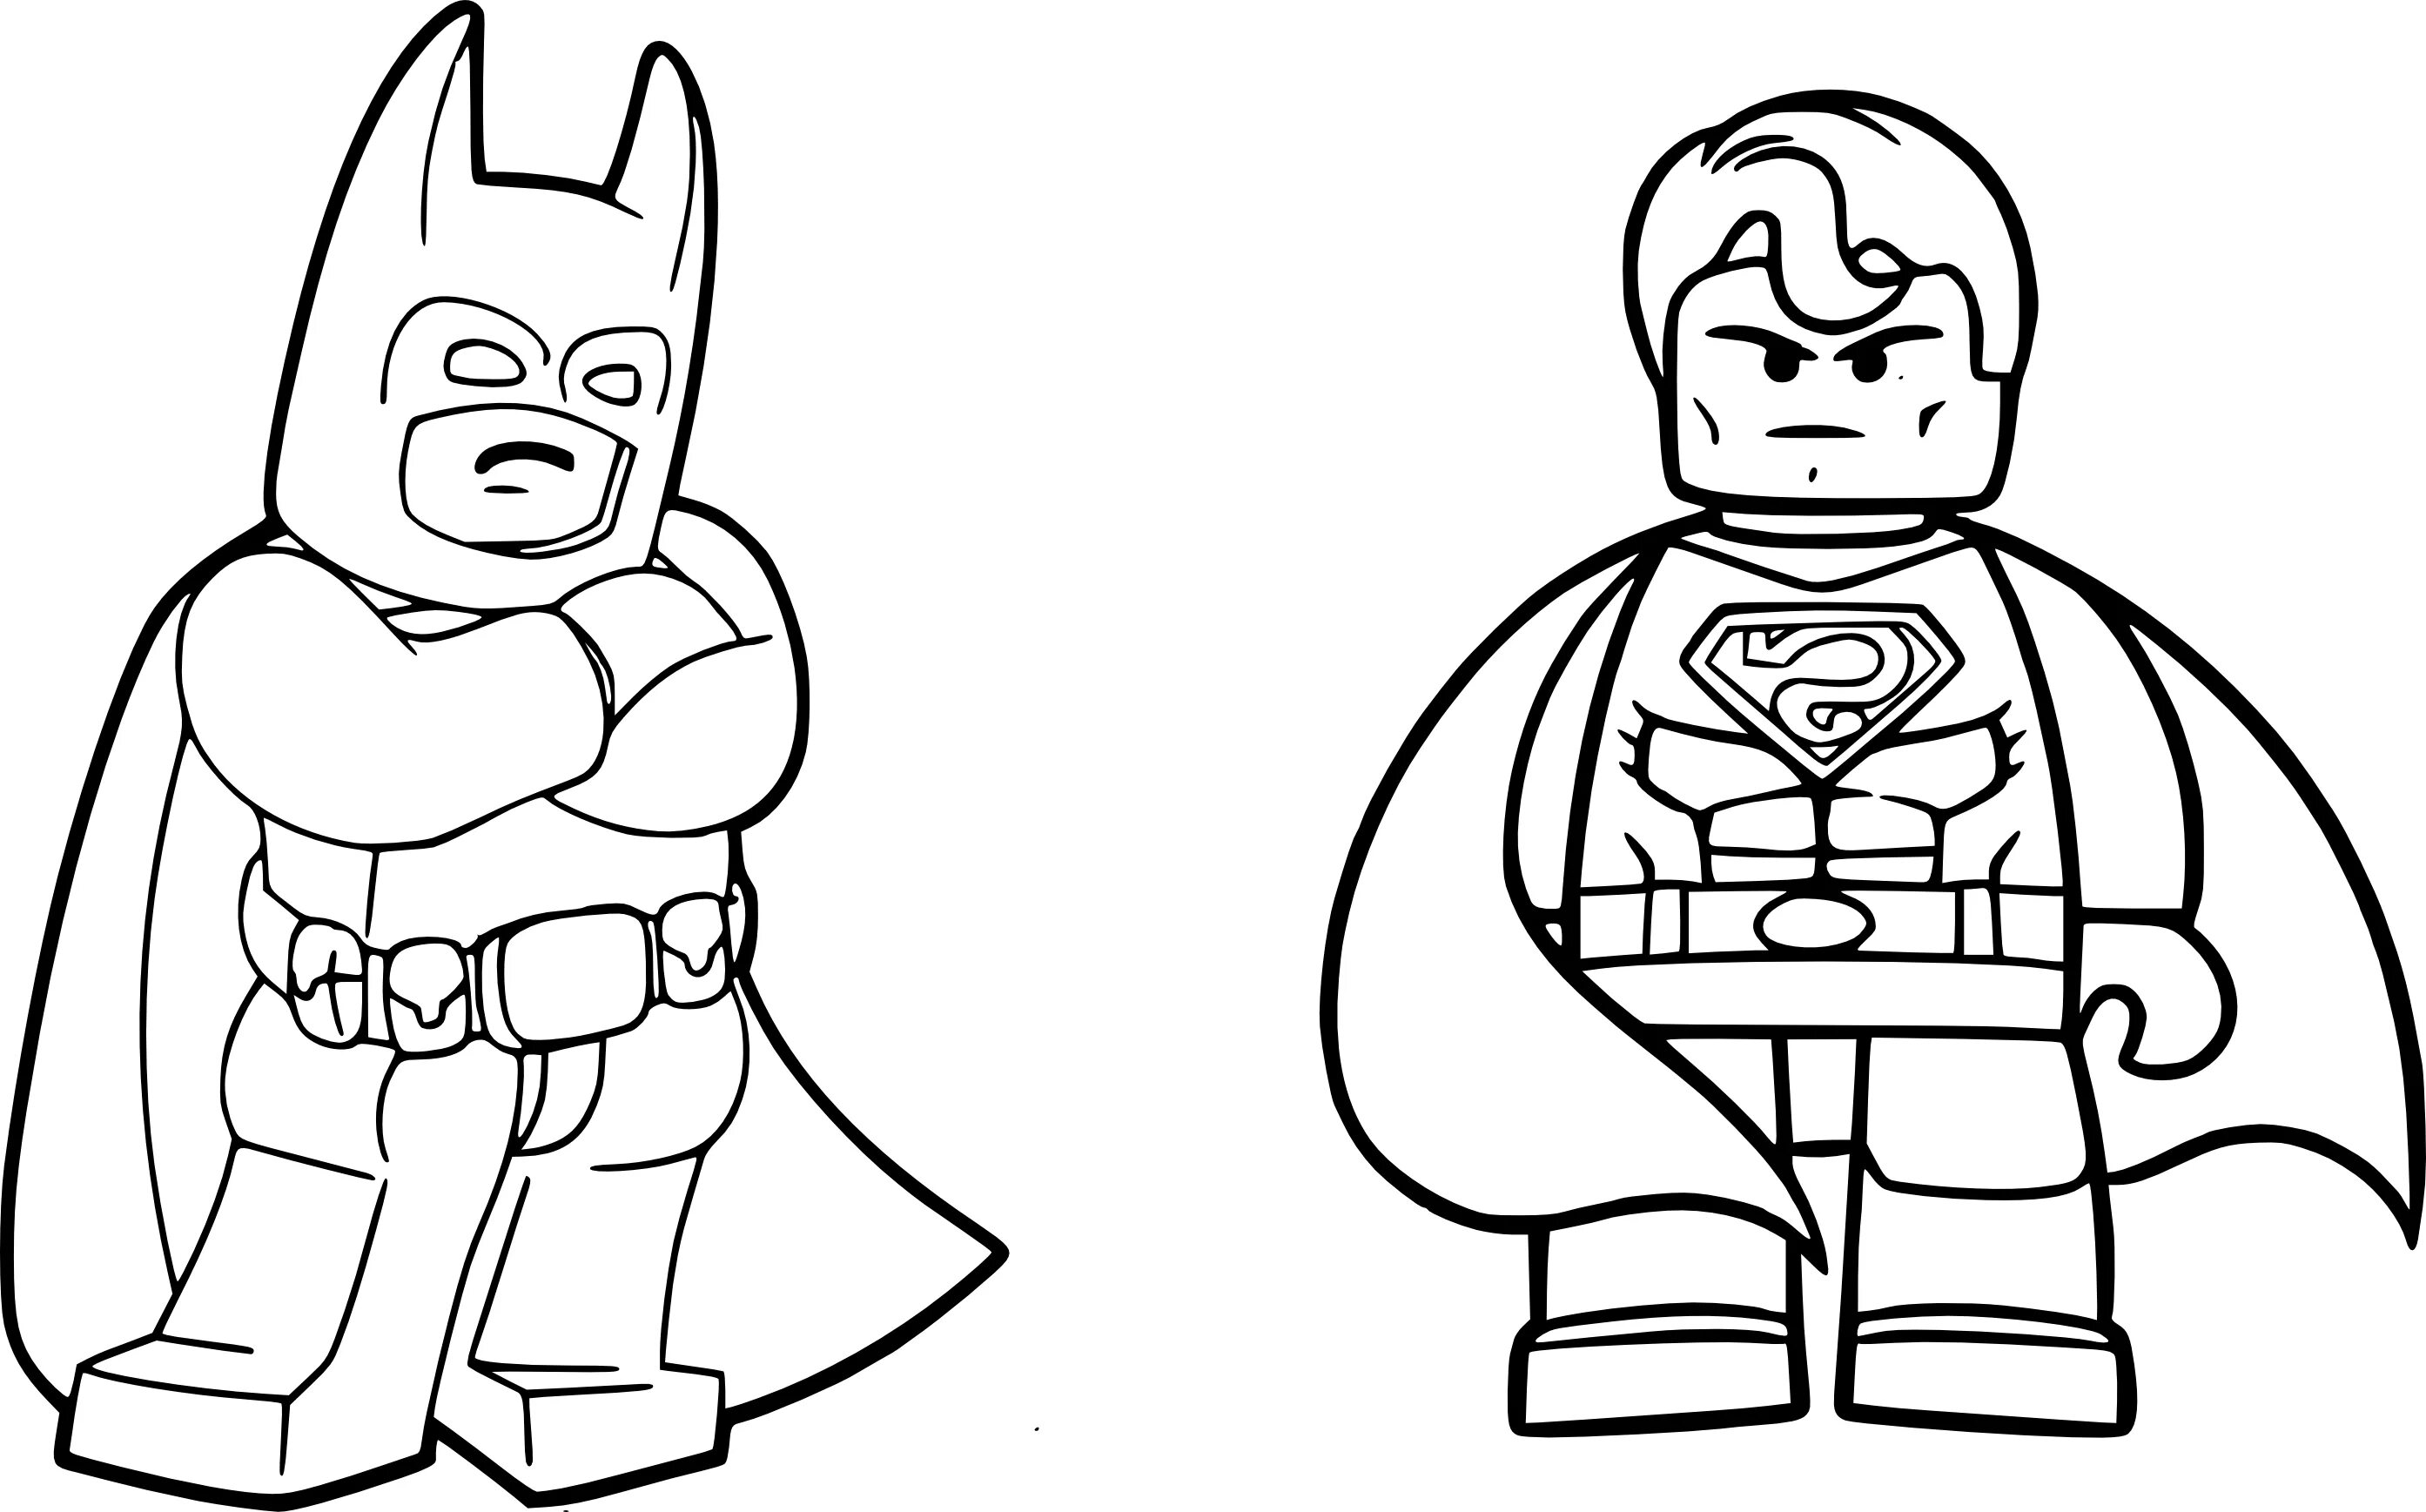 Lego man superheroes #2